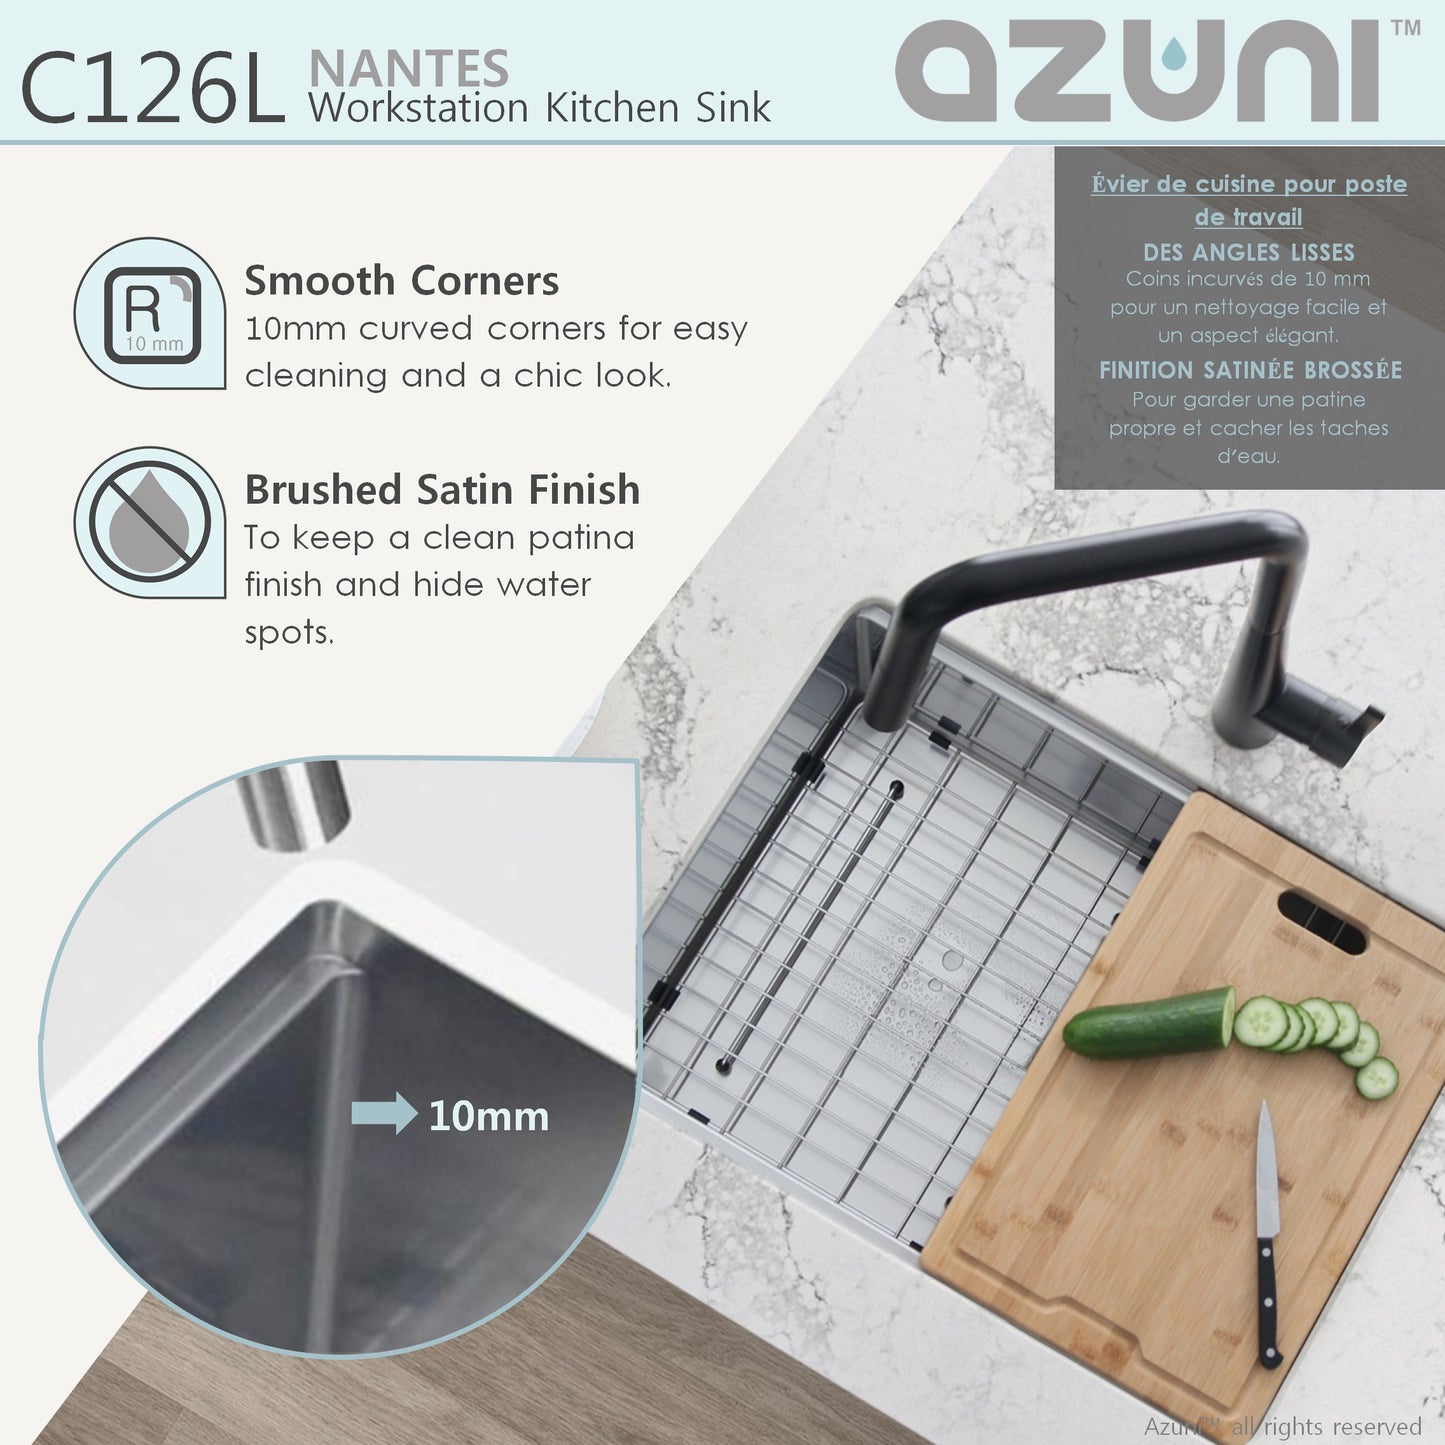 AZUNI 25"L x 19"W  Nante Single Bowl Undermount 16G Reversible Workstation Kitchen Sink with accessories C126L